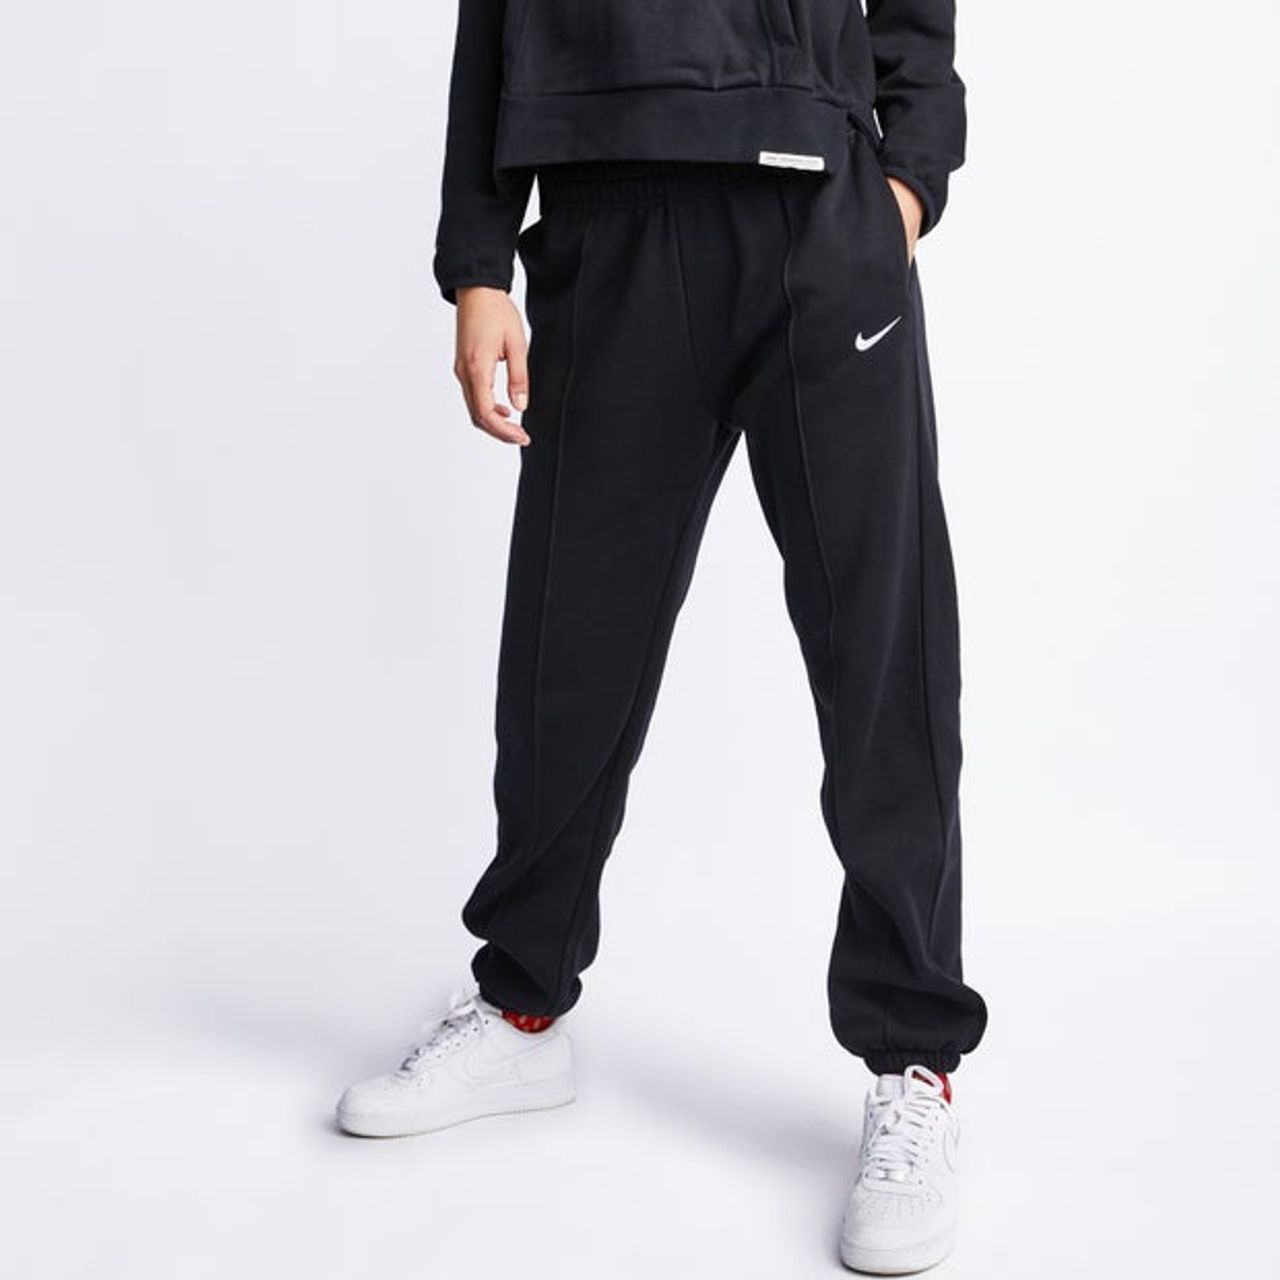 Nike Trend Fleece Essentials - Women Pants BV4089-010 - Compare prices